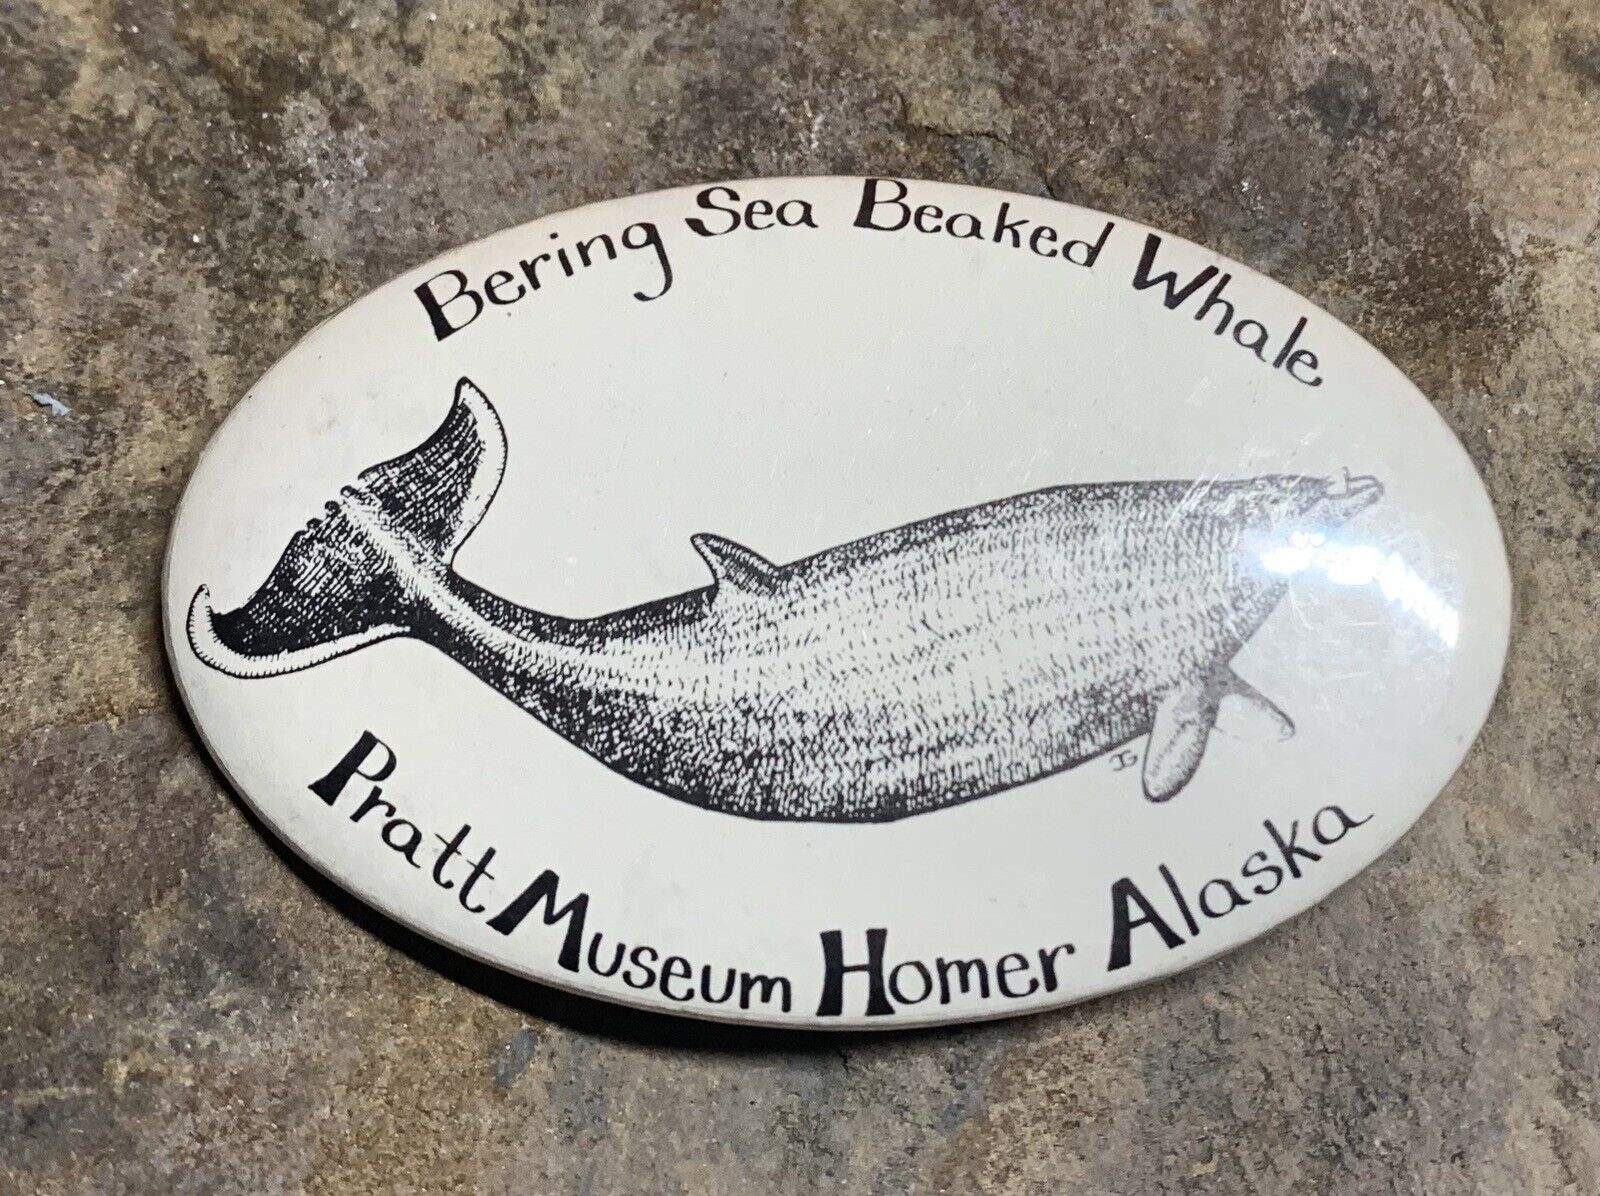 Bering Sea Beaked Whale Pin Button. Pratt Musuem Homer Alaska. Okay Condition